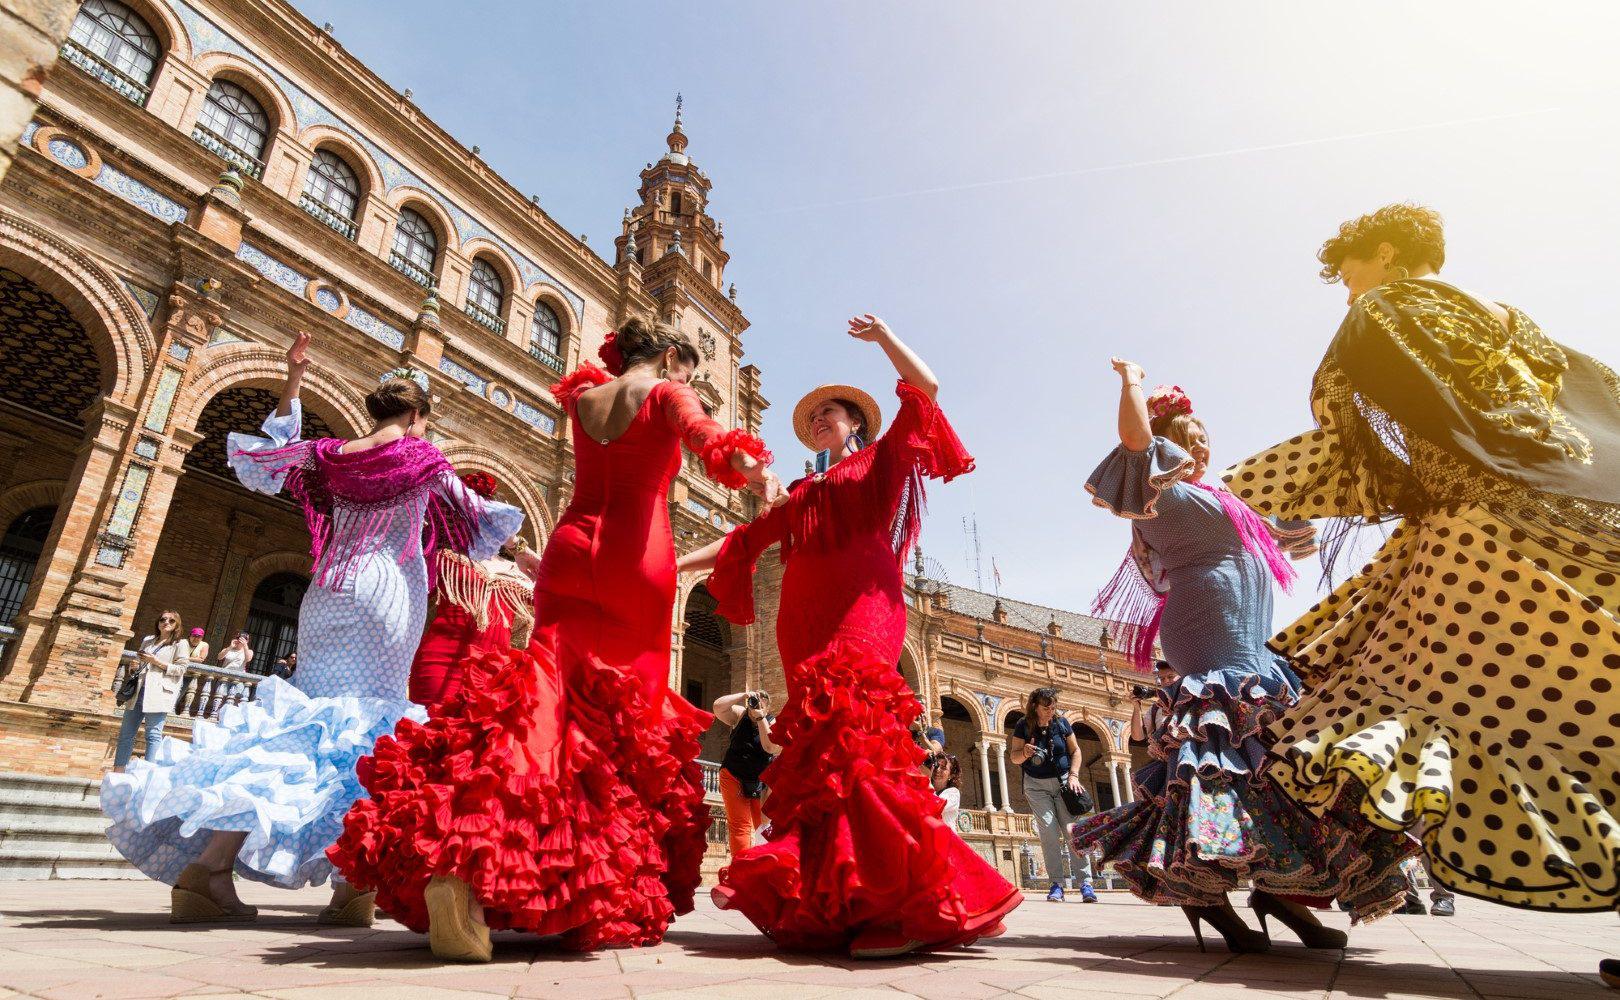 best-flamenco-shows-in-seville-spain-1-1620x1000-59883-1604337552.jpg